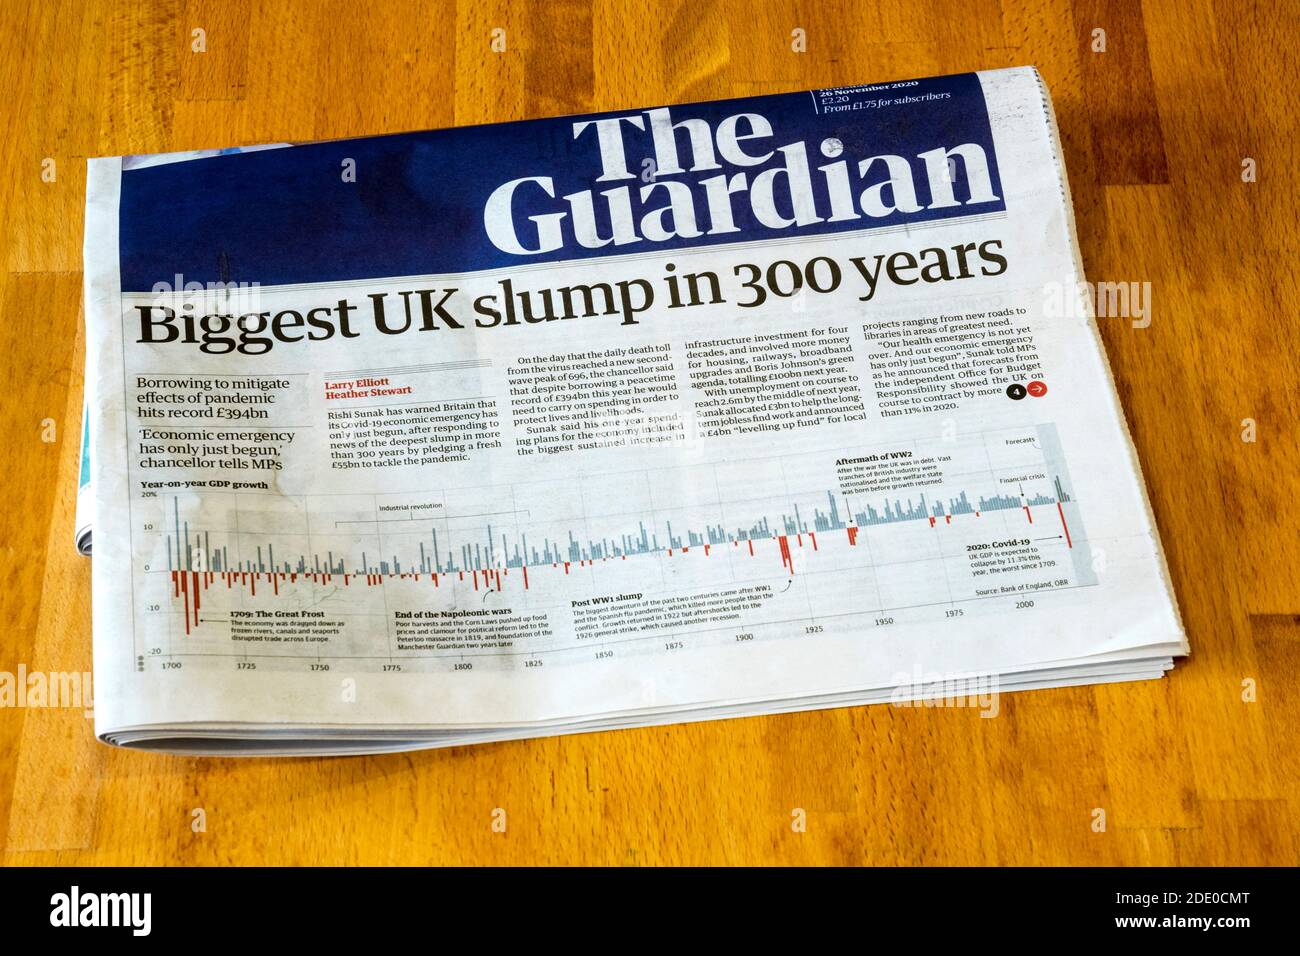 Guardian headline of 26 November 2020 reports on the biggest UK economic slump in 300 years. Stock Photo